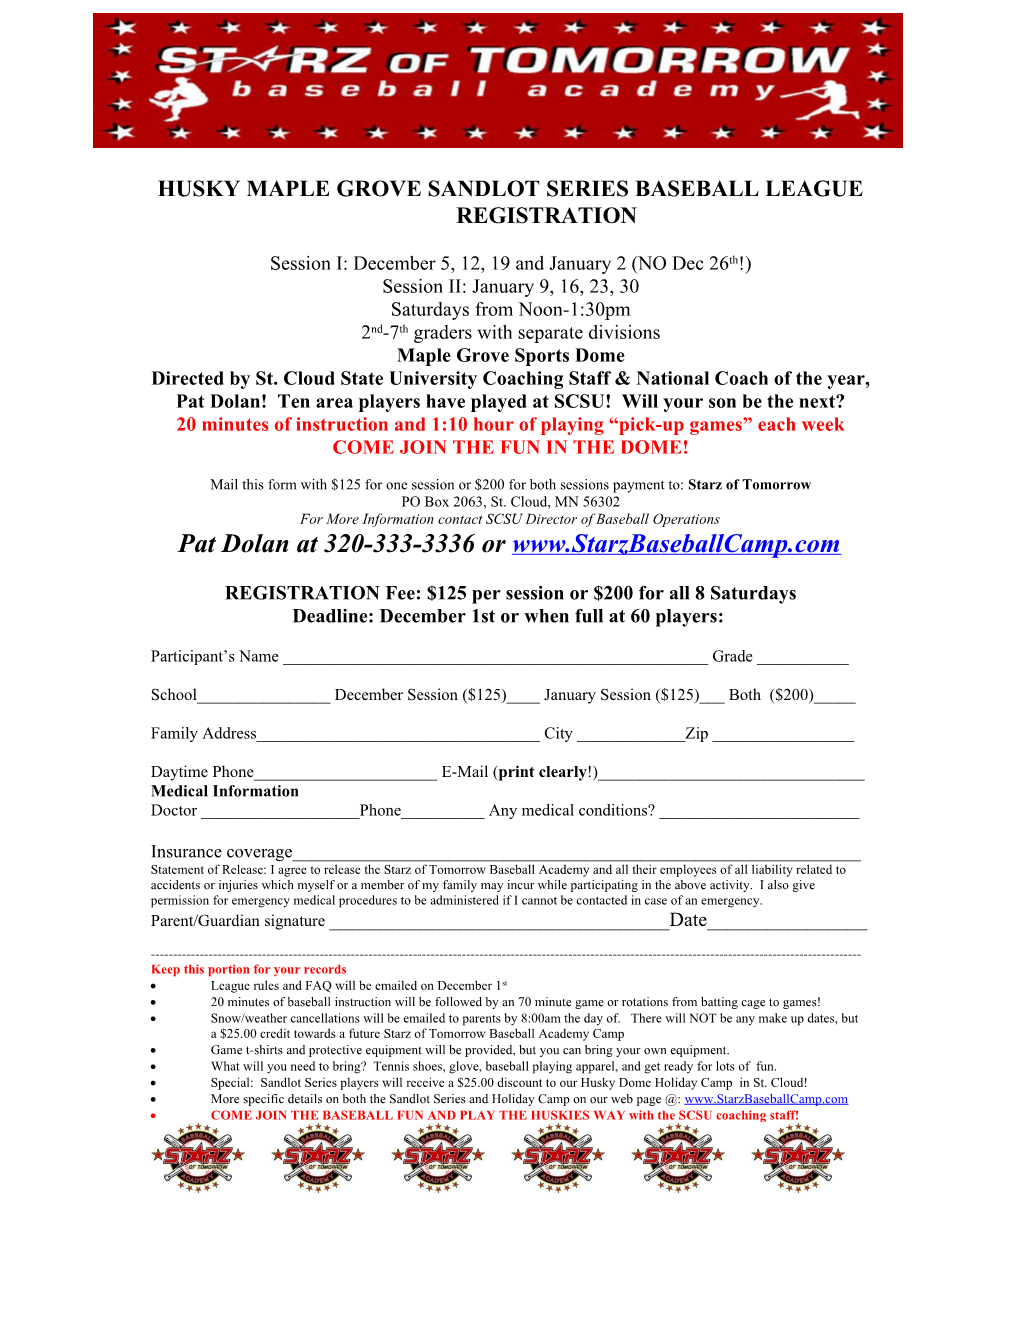 Starz of Tomorrow Fall Baseball League Registration